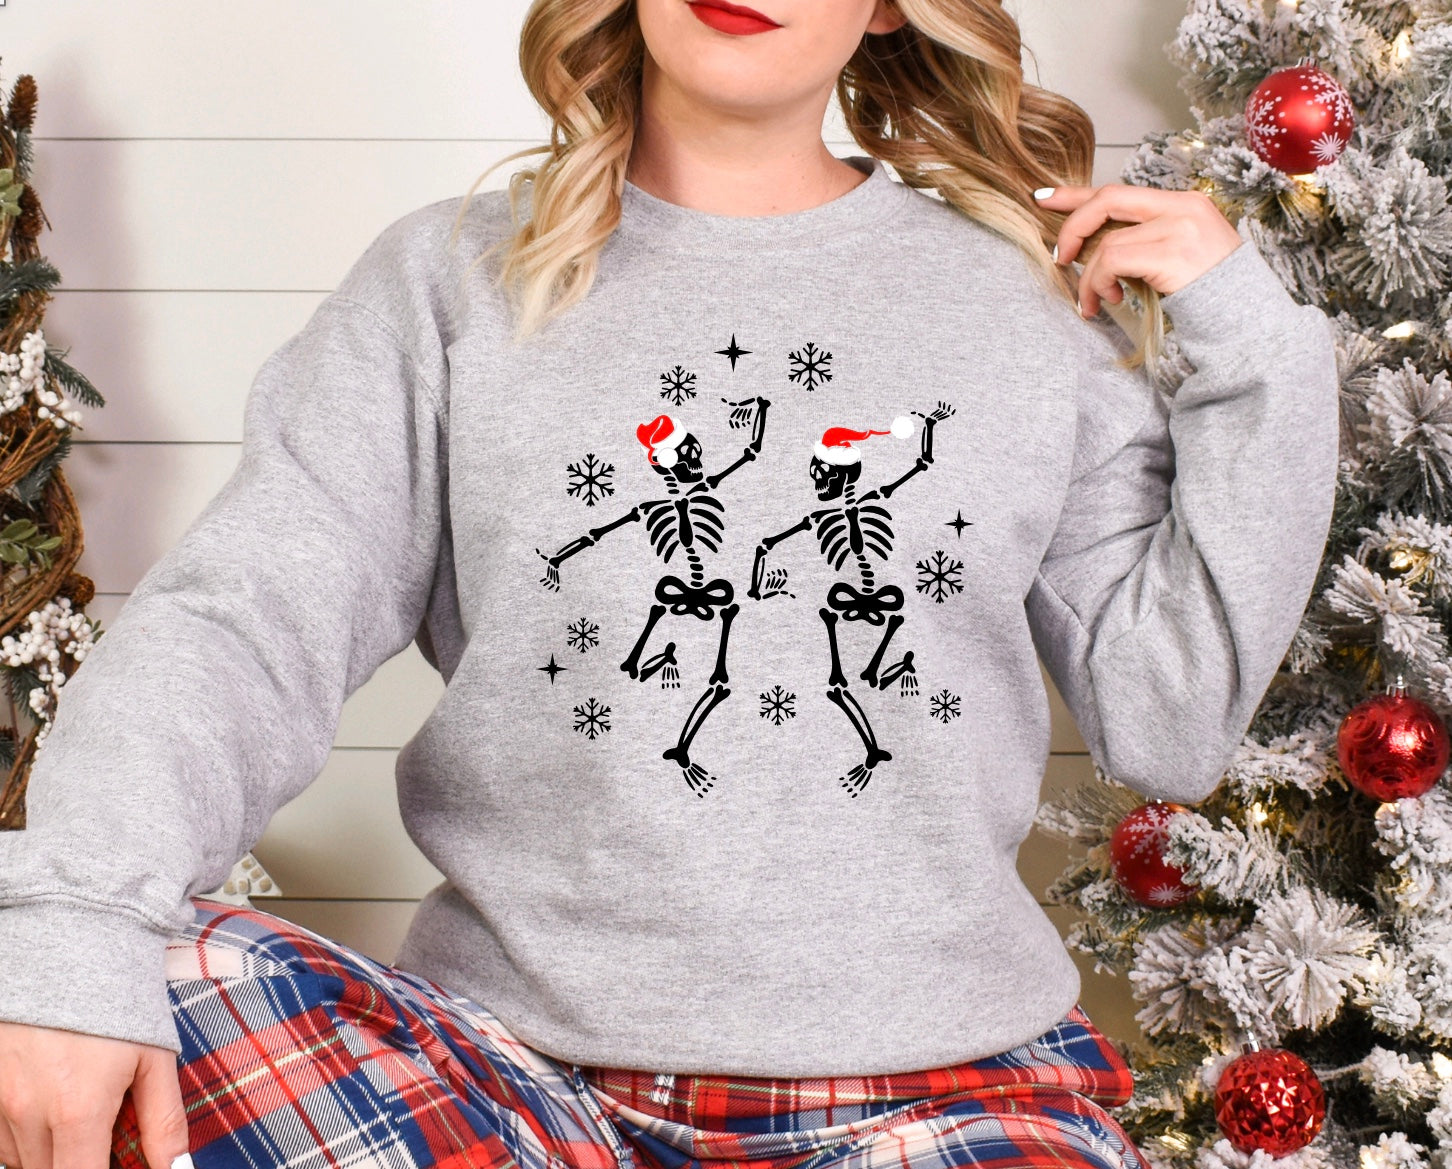 Dancing skeletons with Santa hats Christmas unisex crewneck sweatshirt in grey